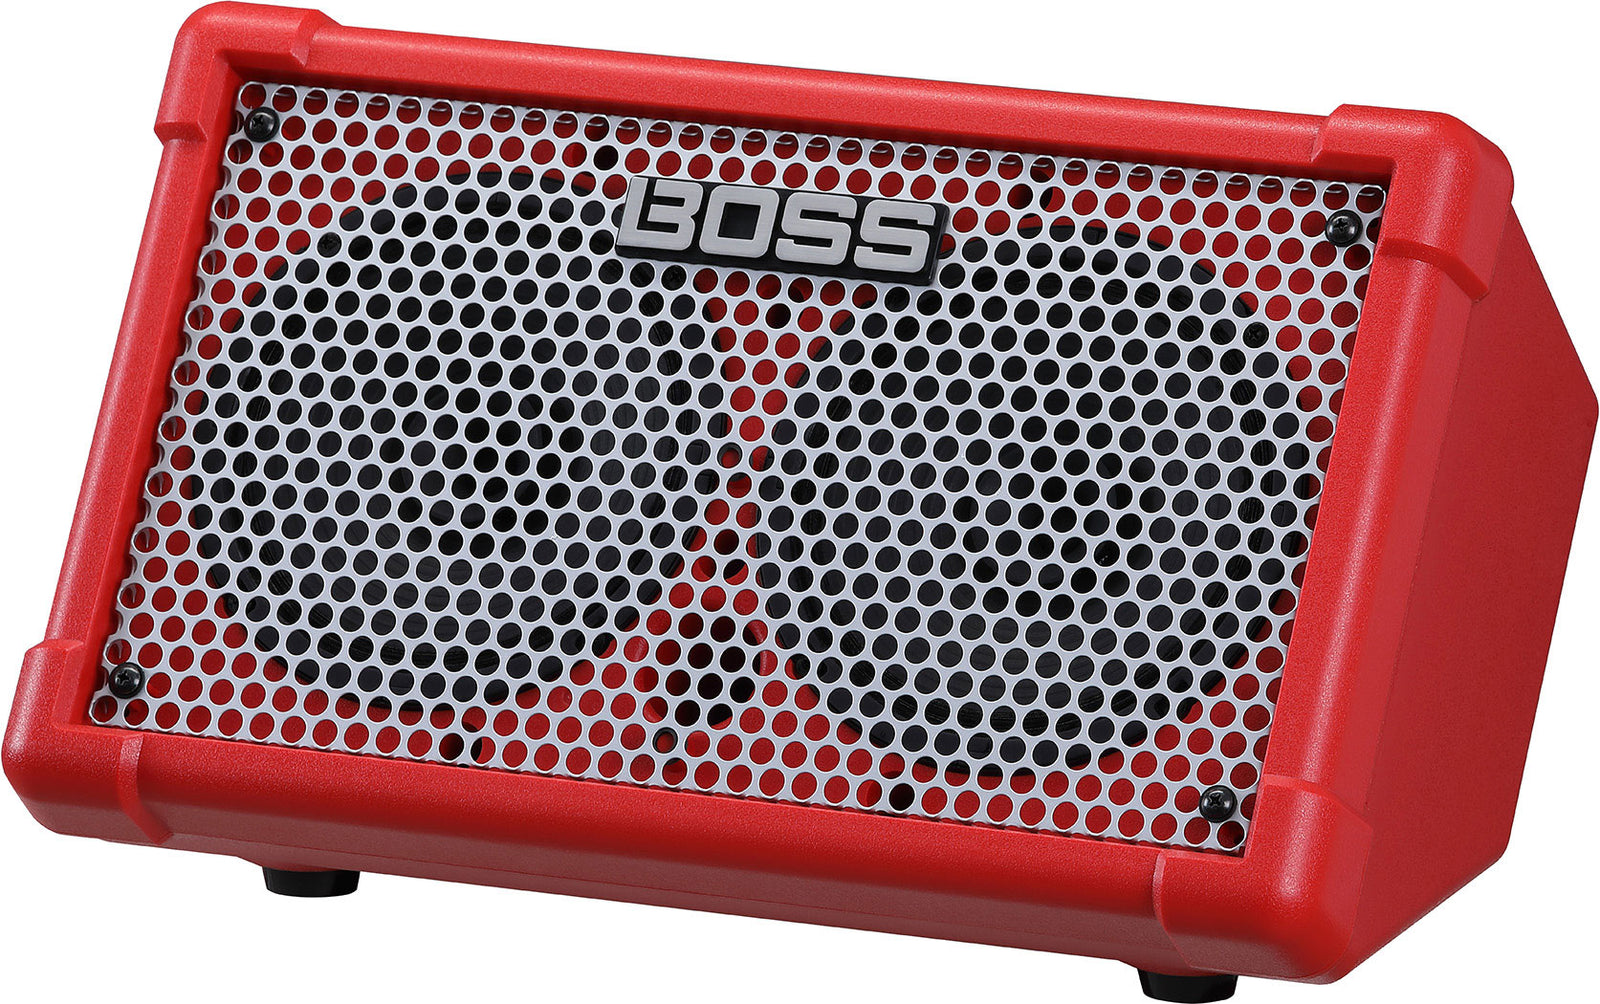 BOSS CUBE Street II Battery-Powered Stereo Amplifier - Red - A